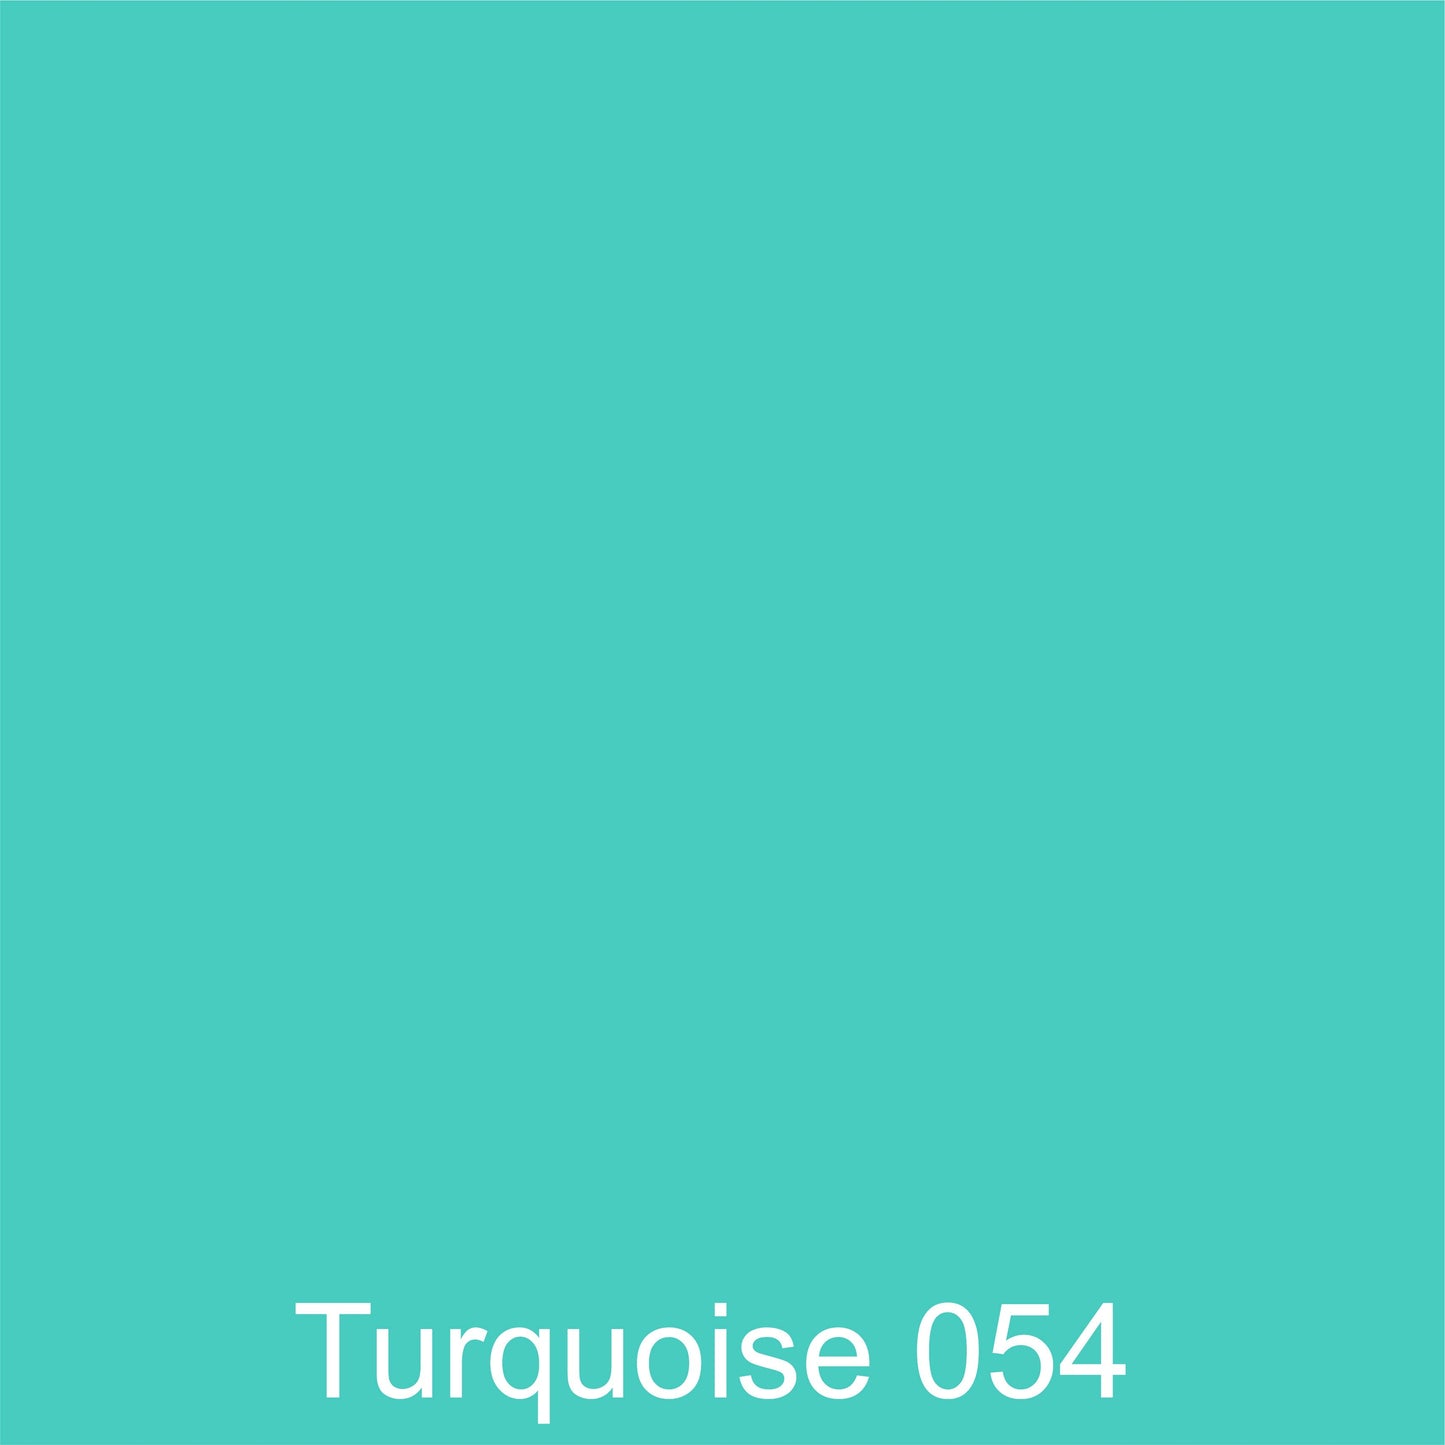 Oracal 651 Matt :- Turquoise - 054 - 300mm x 10 Metres